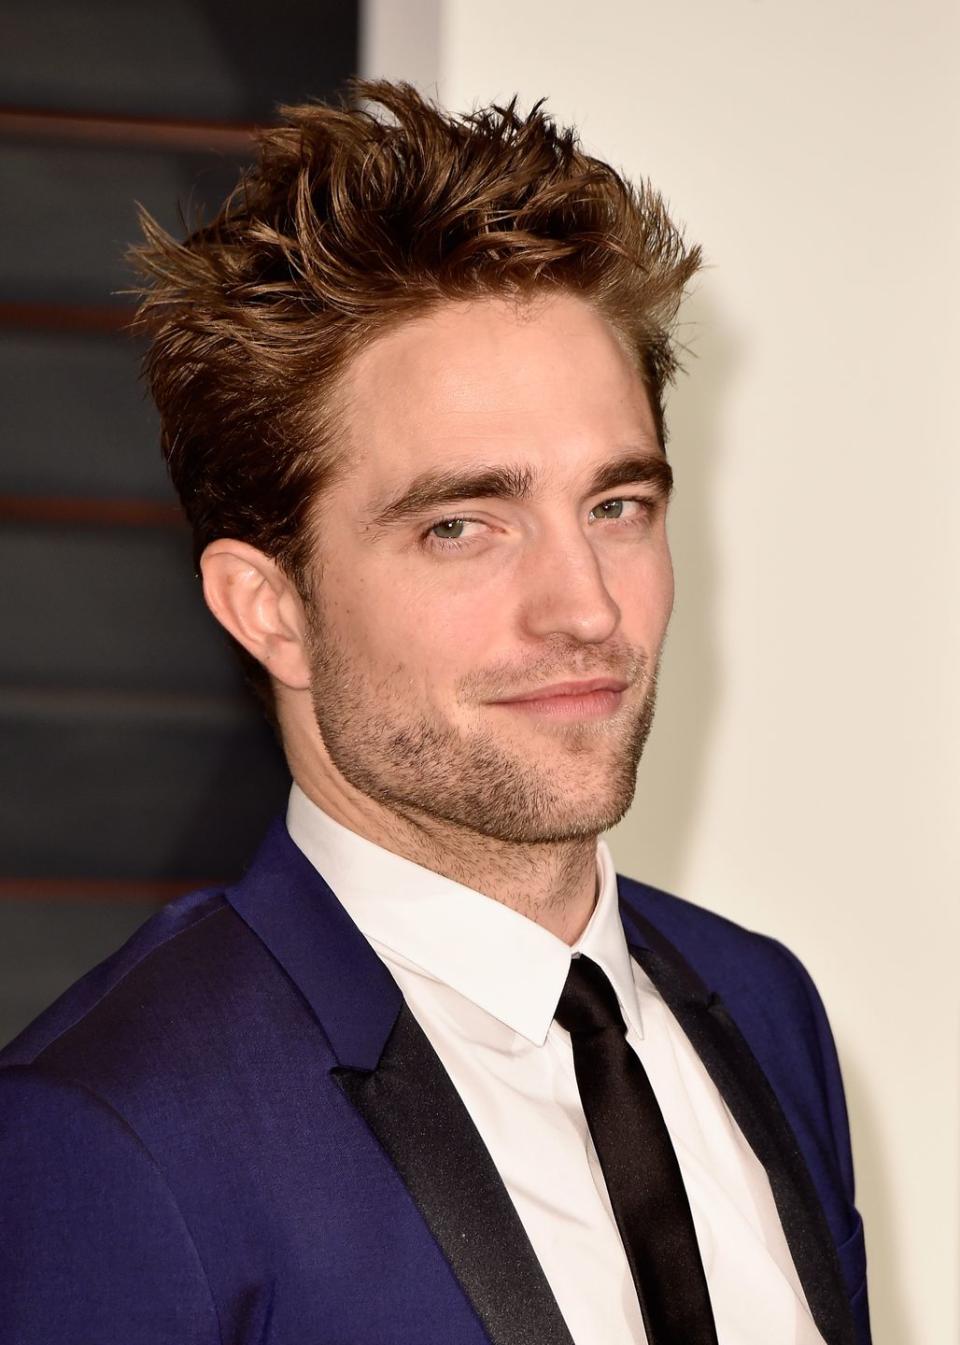 Robert Pattinson as Edward Cullen in 'Twilight'